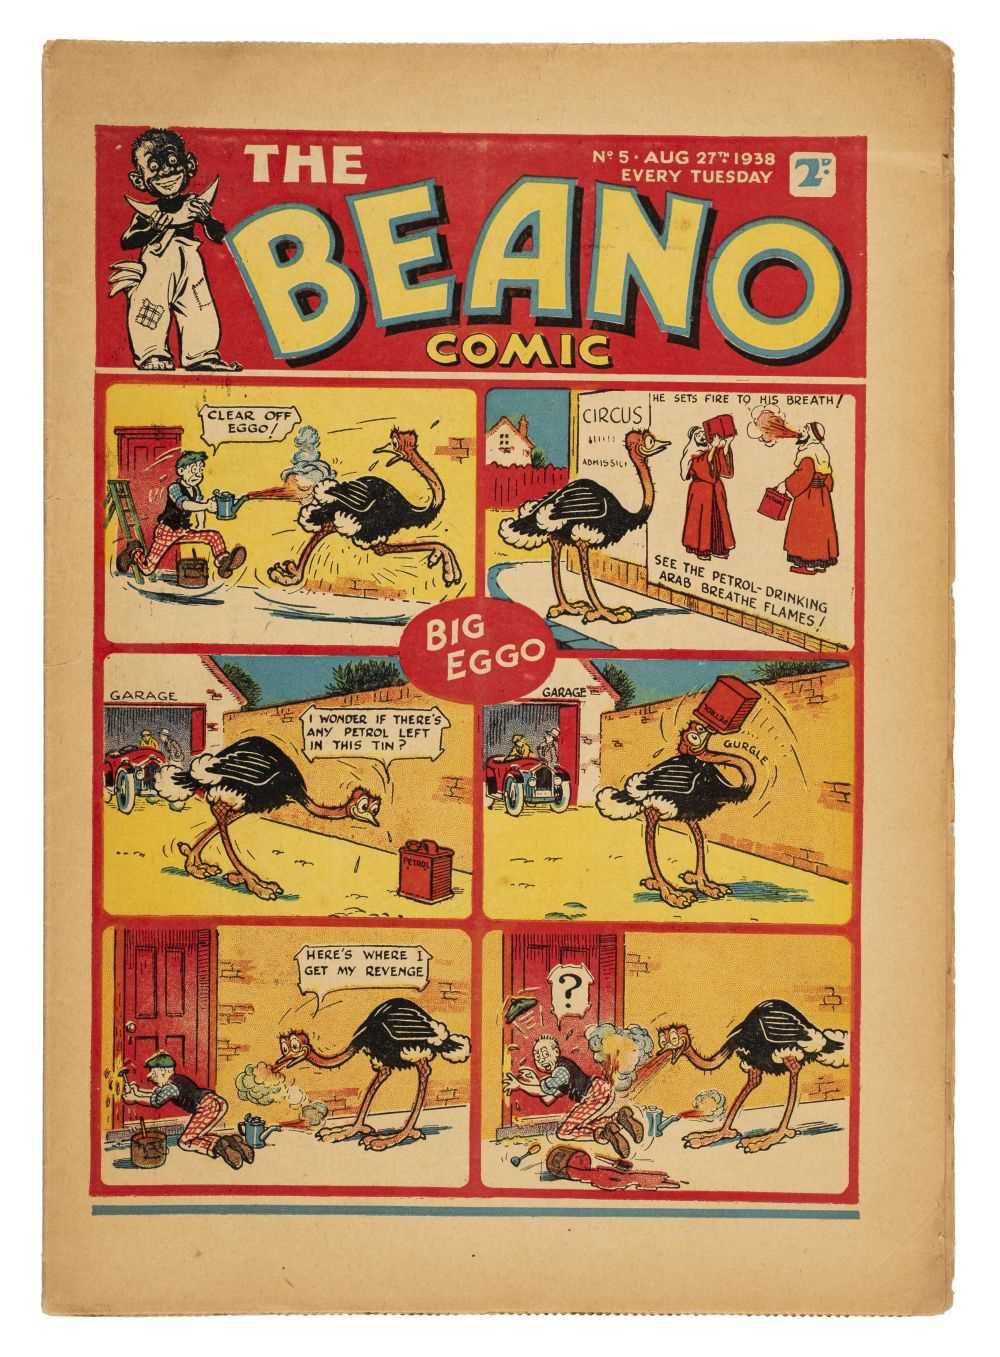 Lot 598 - Beano. The Beano Comic No. 5, 27 August 1938